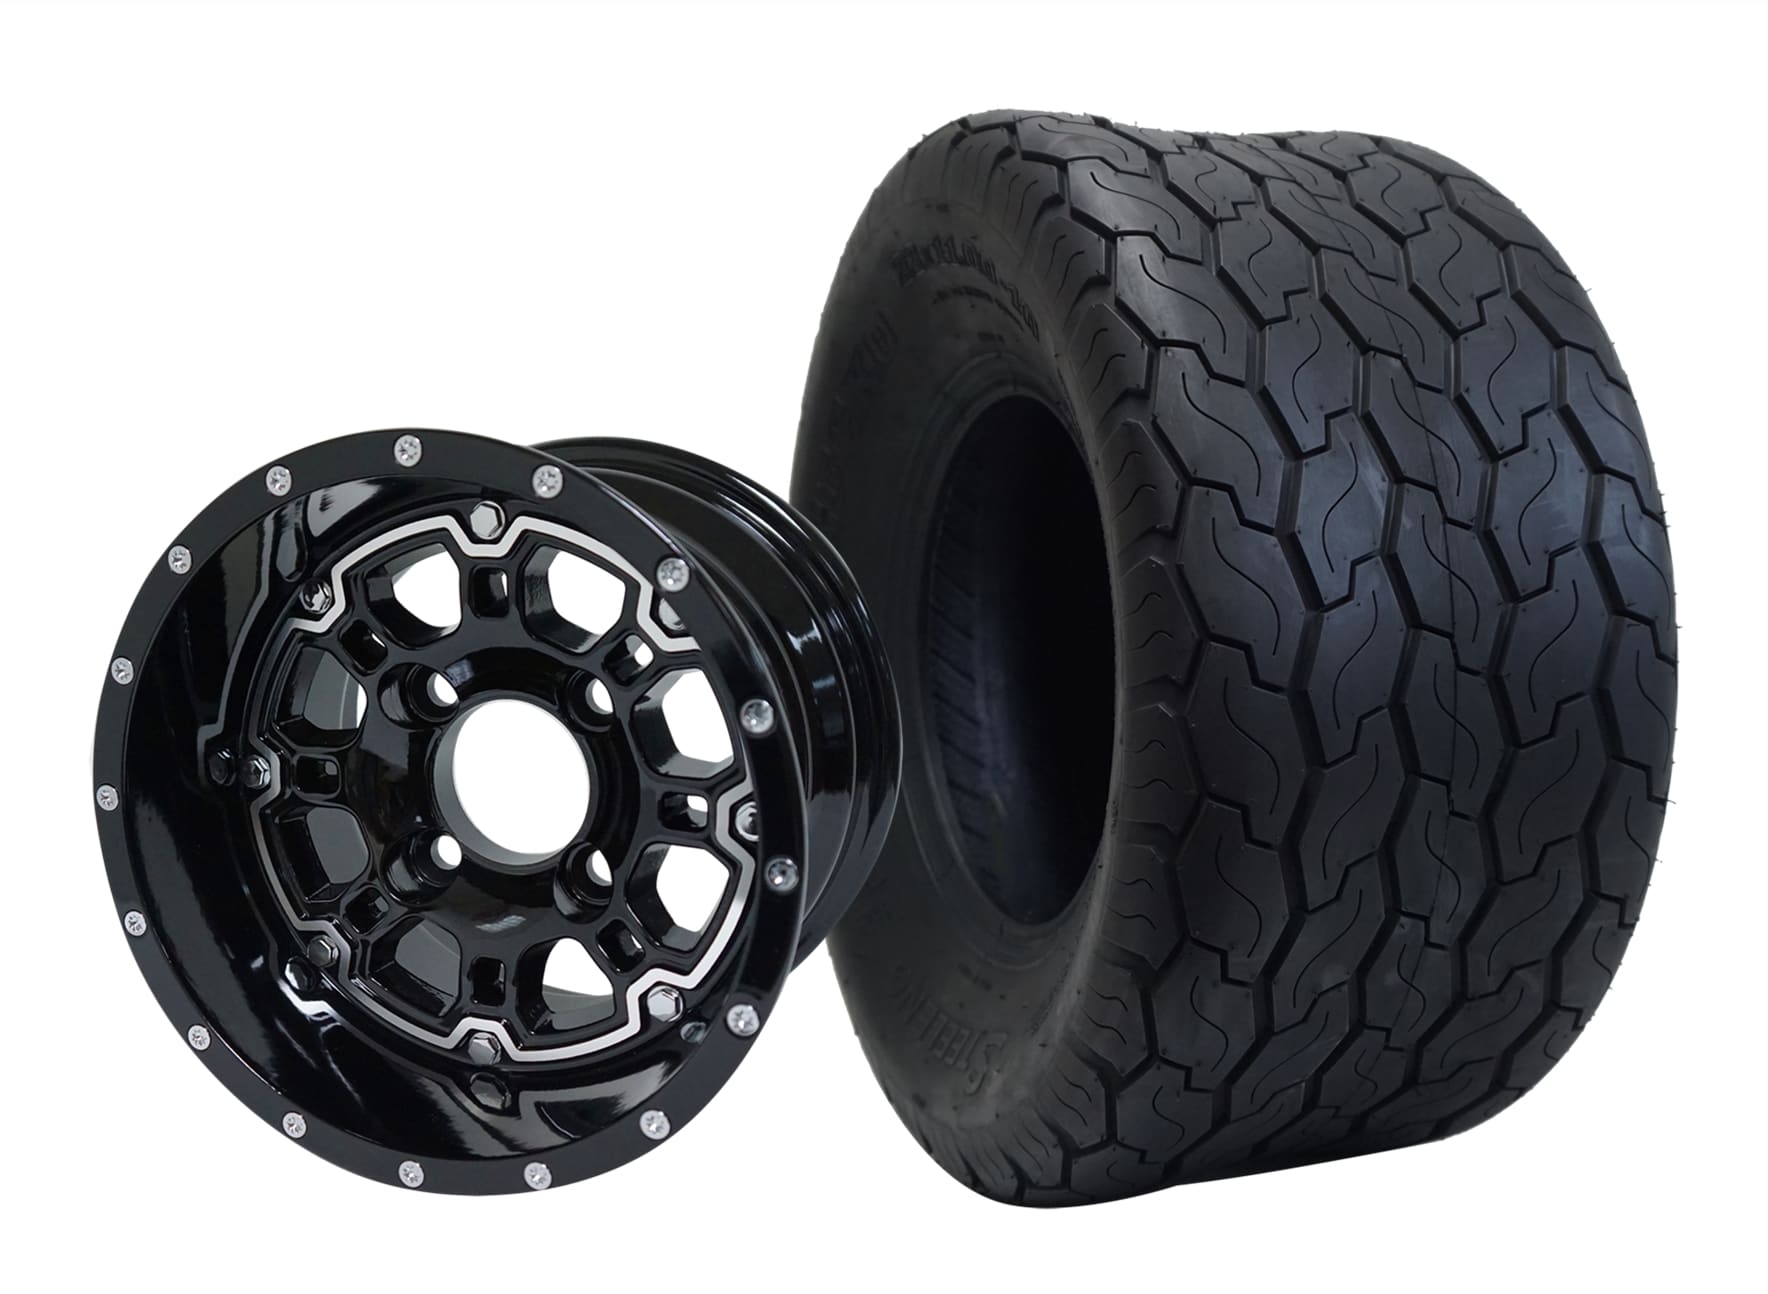 10" Panther Glossy Black Wheel Aluminum Alloy & 18"x9"-10" Gecko All Terrain Tire x4